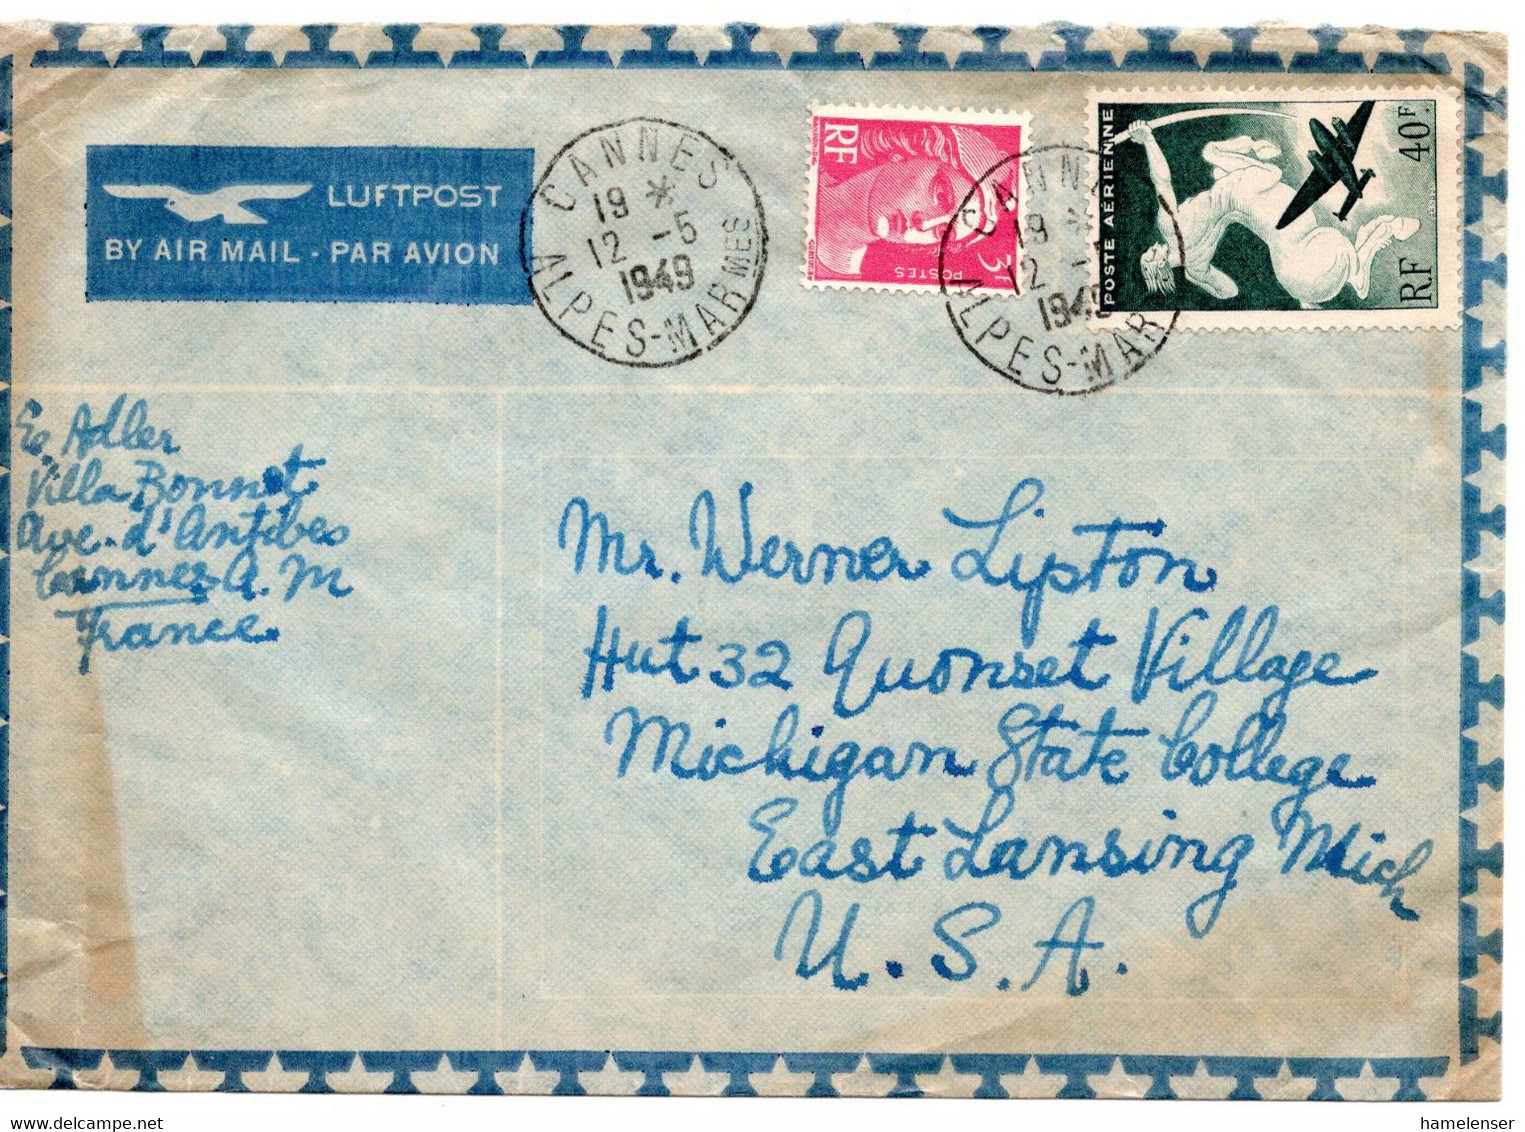 61049 - Frankreich - 1949 - 40F Luftpost MiF A LpBf CANNES -> East Lansing, MI (USA), Etw Fleckig (Marken OK) - Briefe U. Dokumente